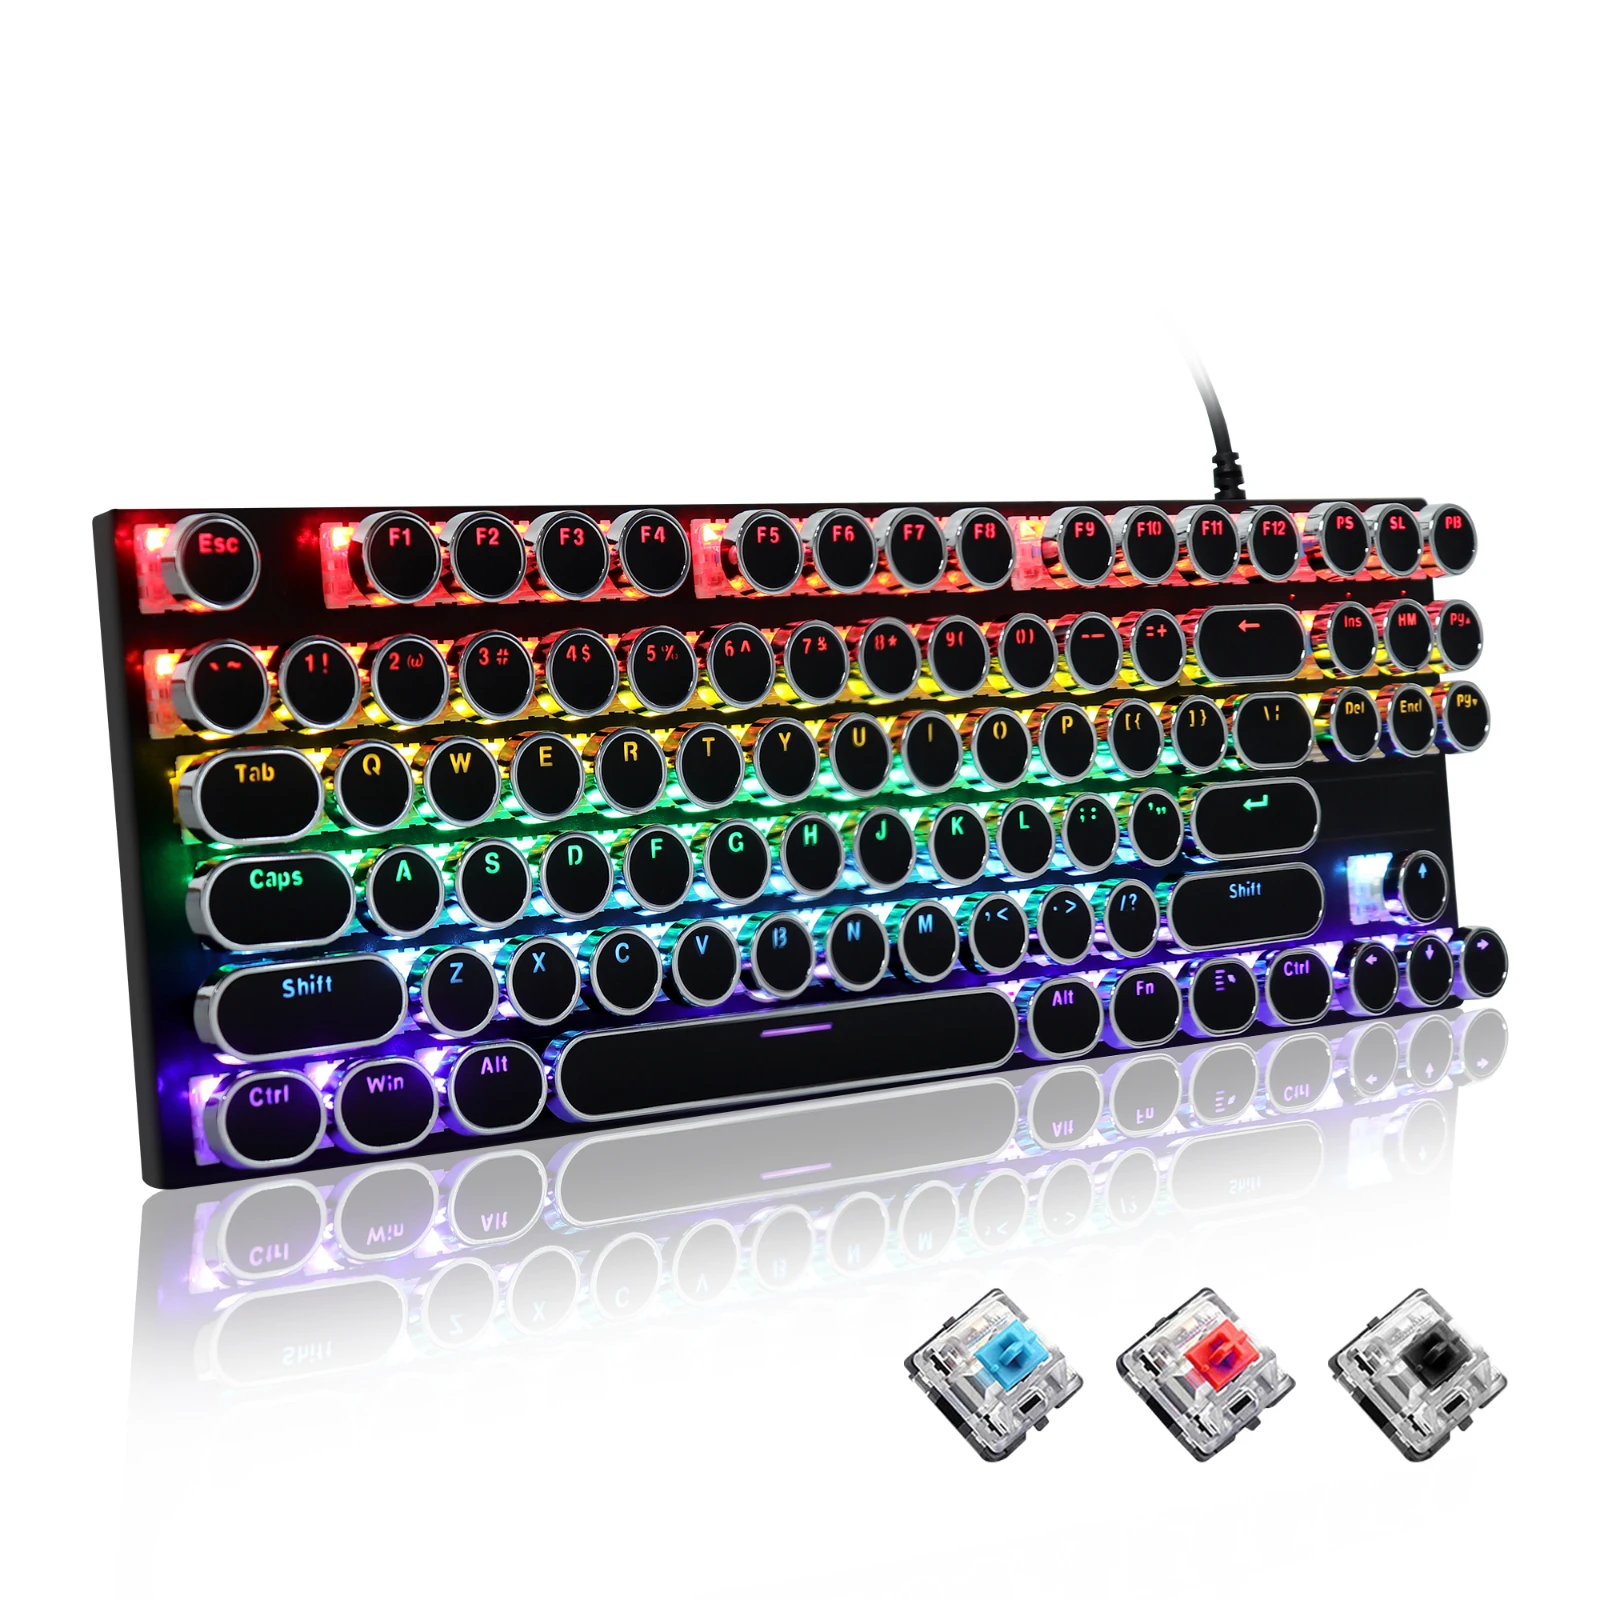 

New Compact Mechanical Keyboard 87 Key USB Wired Keyboard RGB Backlit Ergonomic Gaming Keyboard Black Blue Red Switch For Laptop